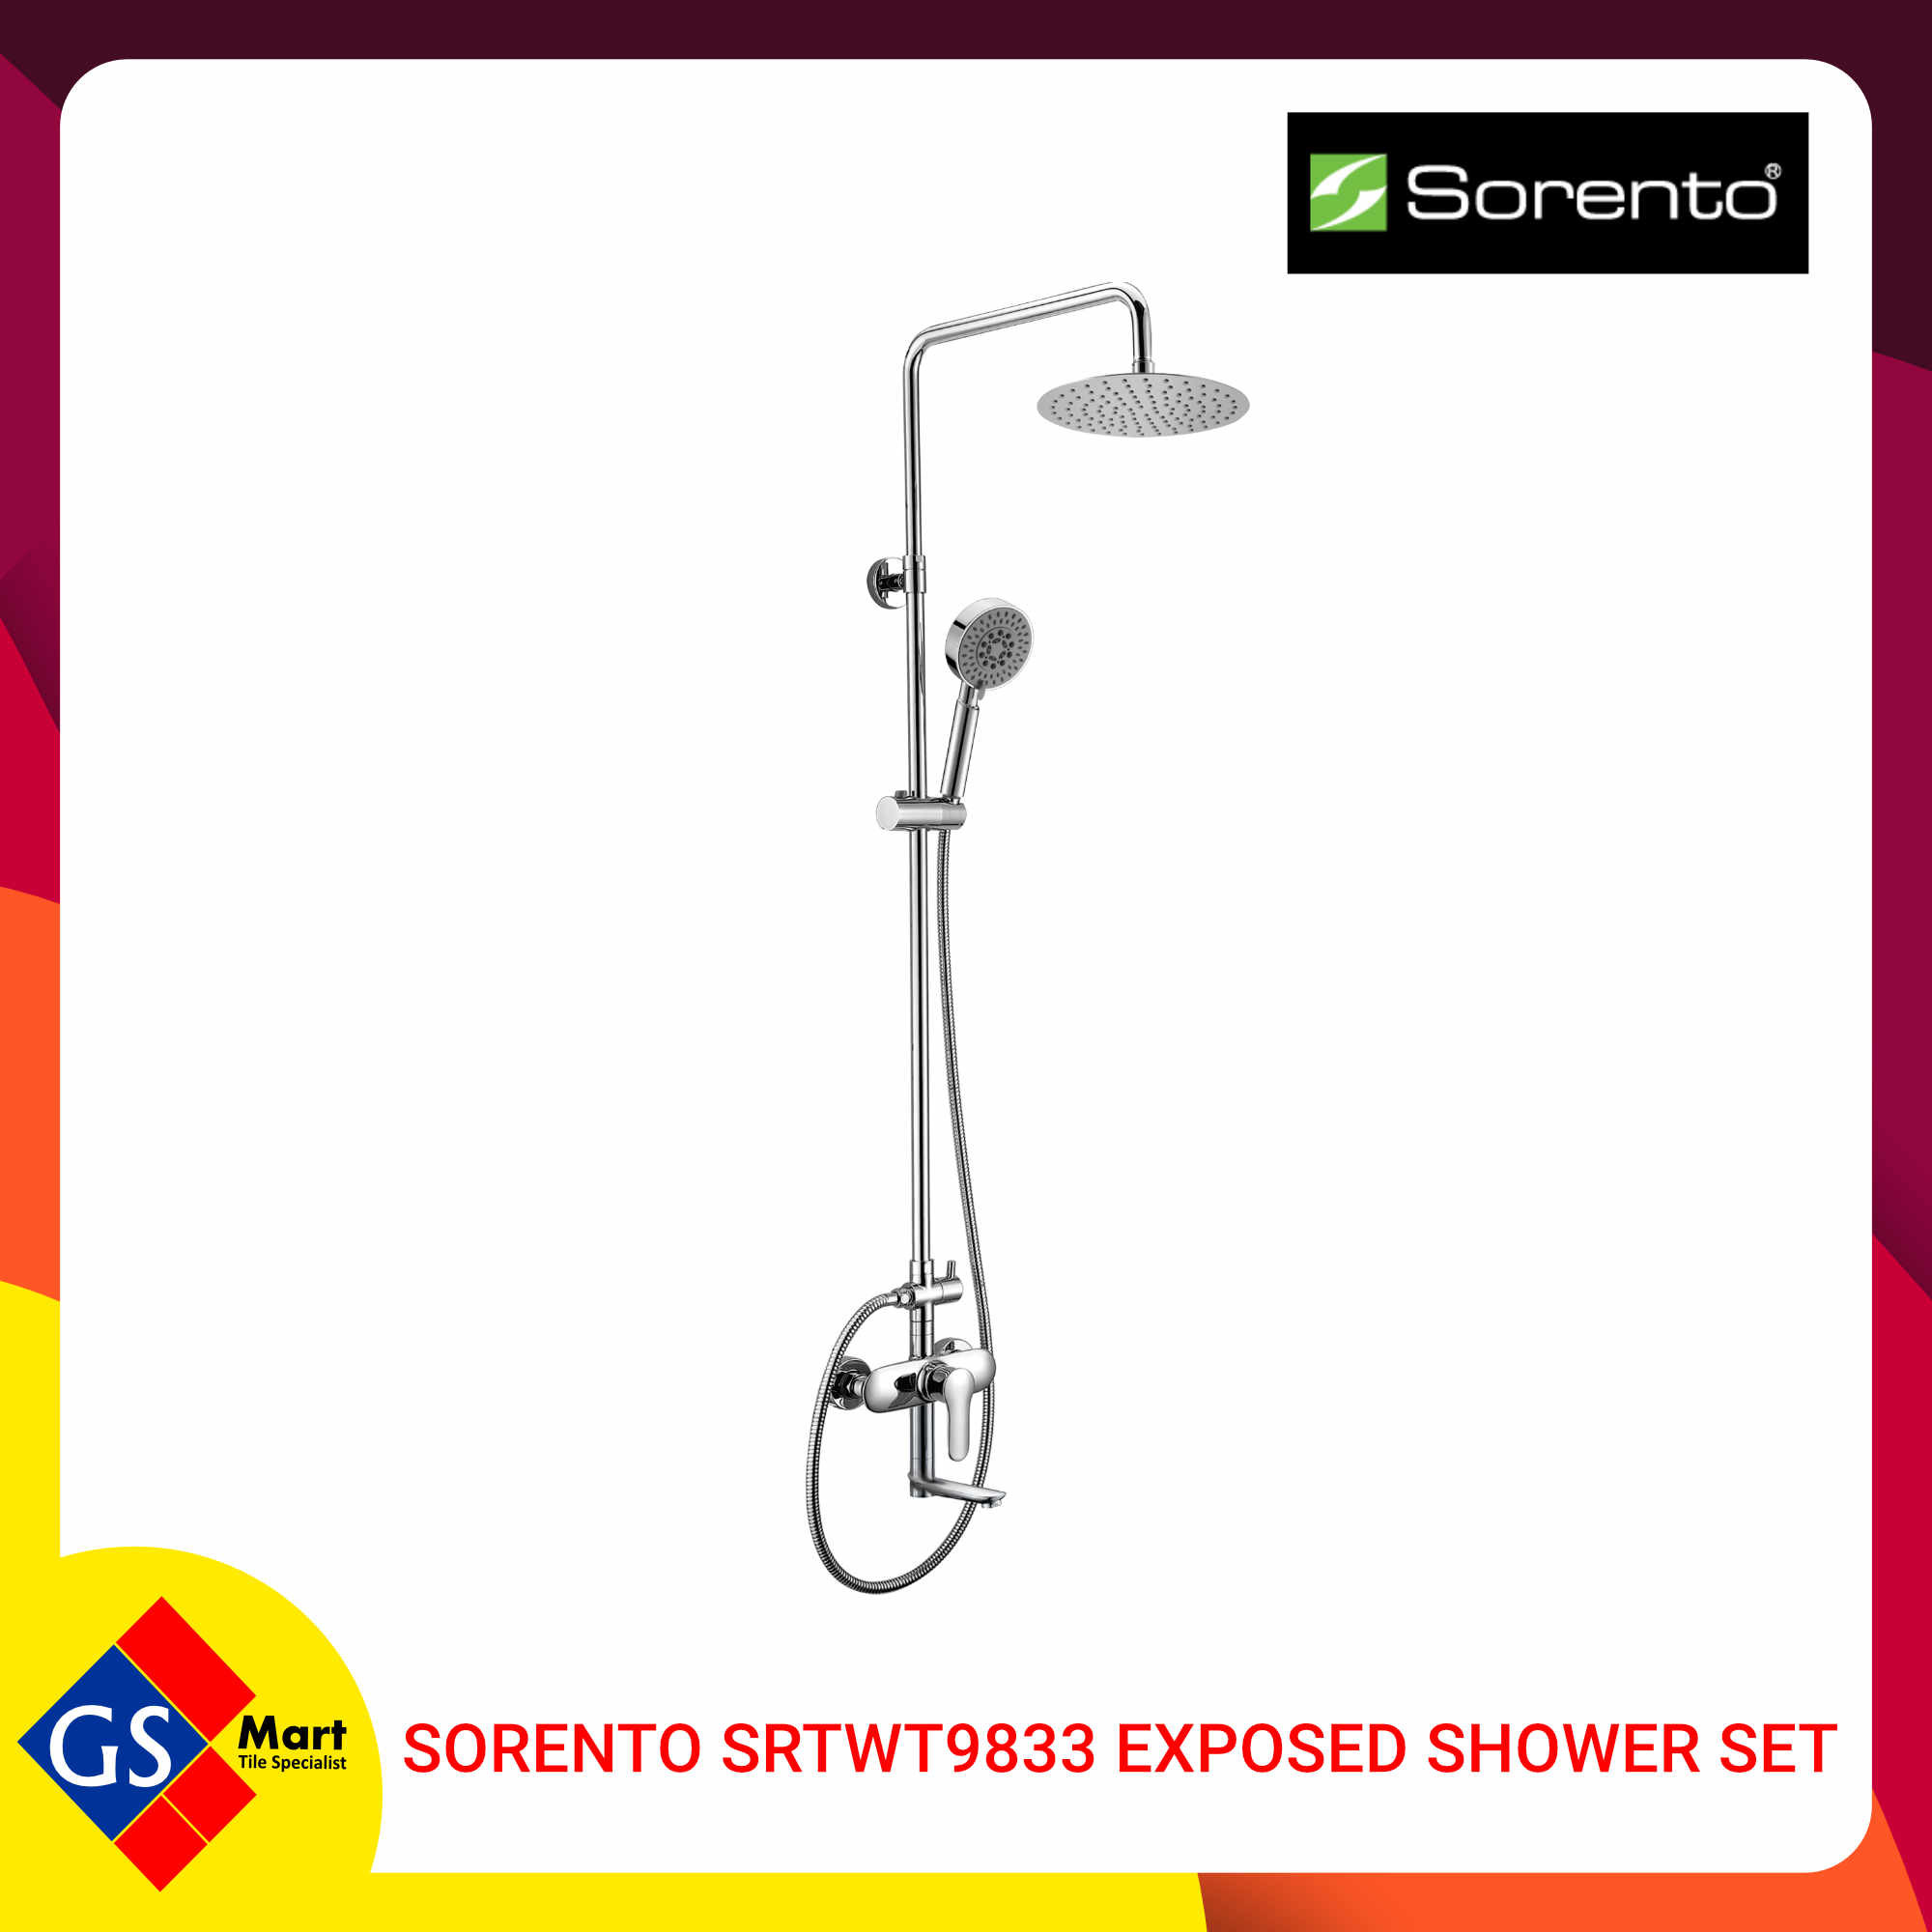 Sorento SRTWT9833 Exposed Shower Set